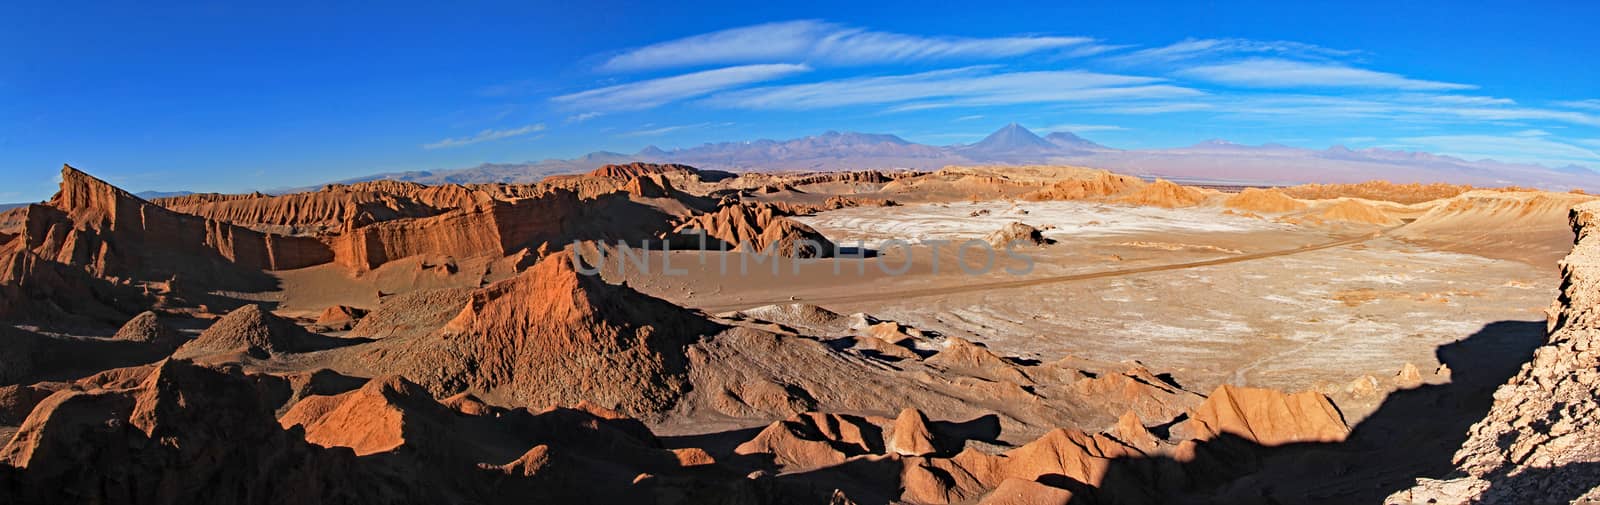 Amphitheater, valle de la Luna, Valley of the Moon, west of San Pedro, Atacama desert of Chile